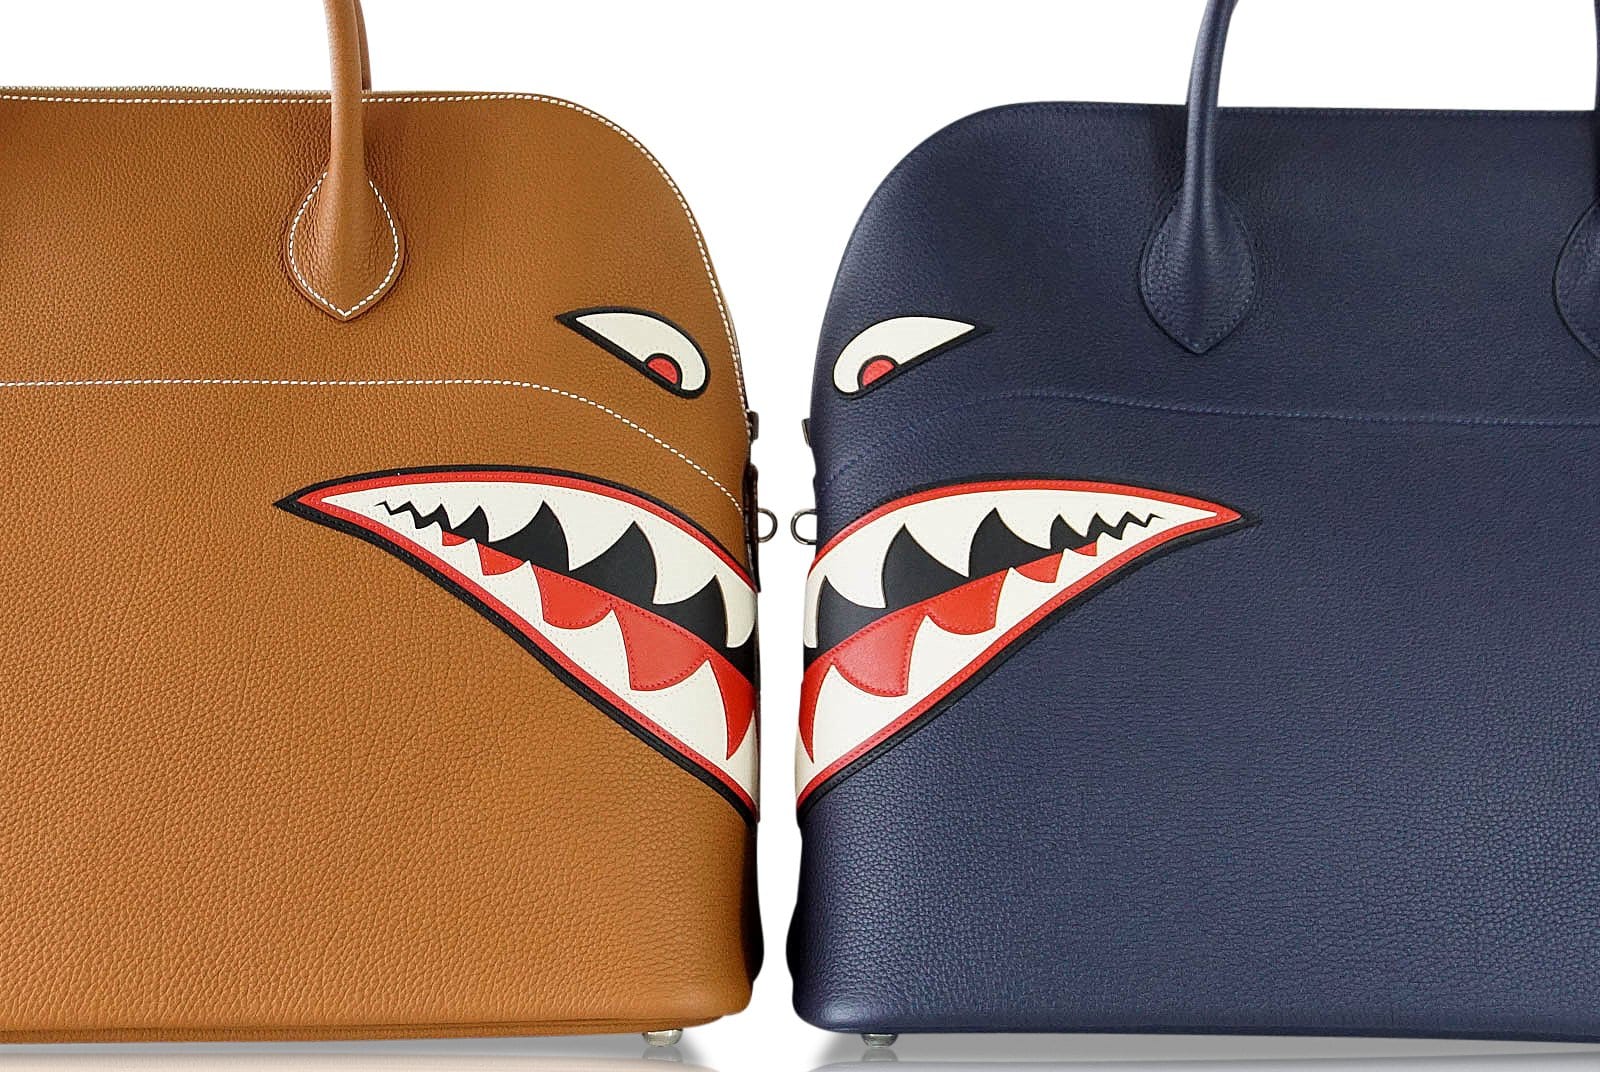 Fastlane Backpack Medium Blue - Bags & Travel | Hyper Ride